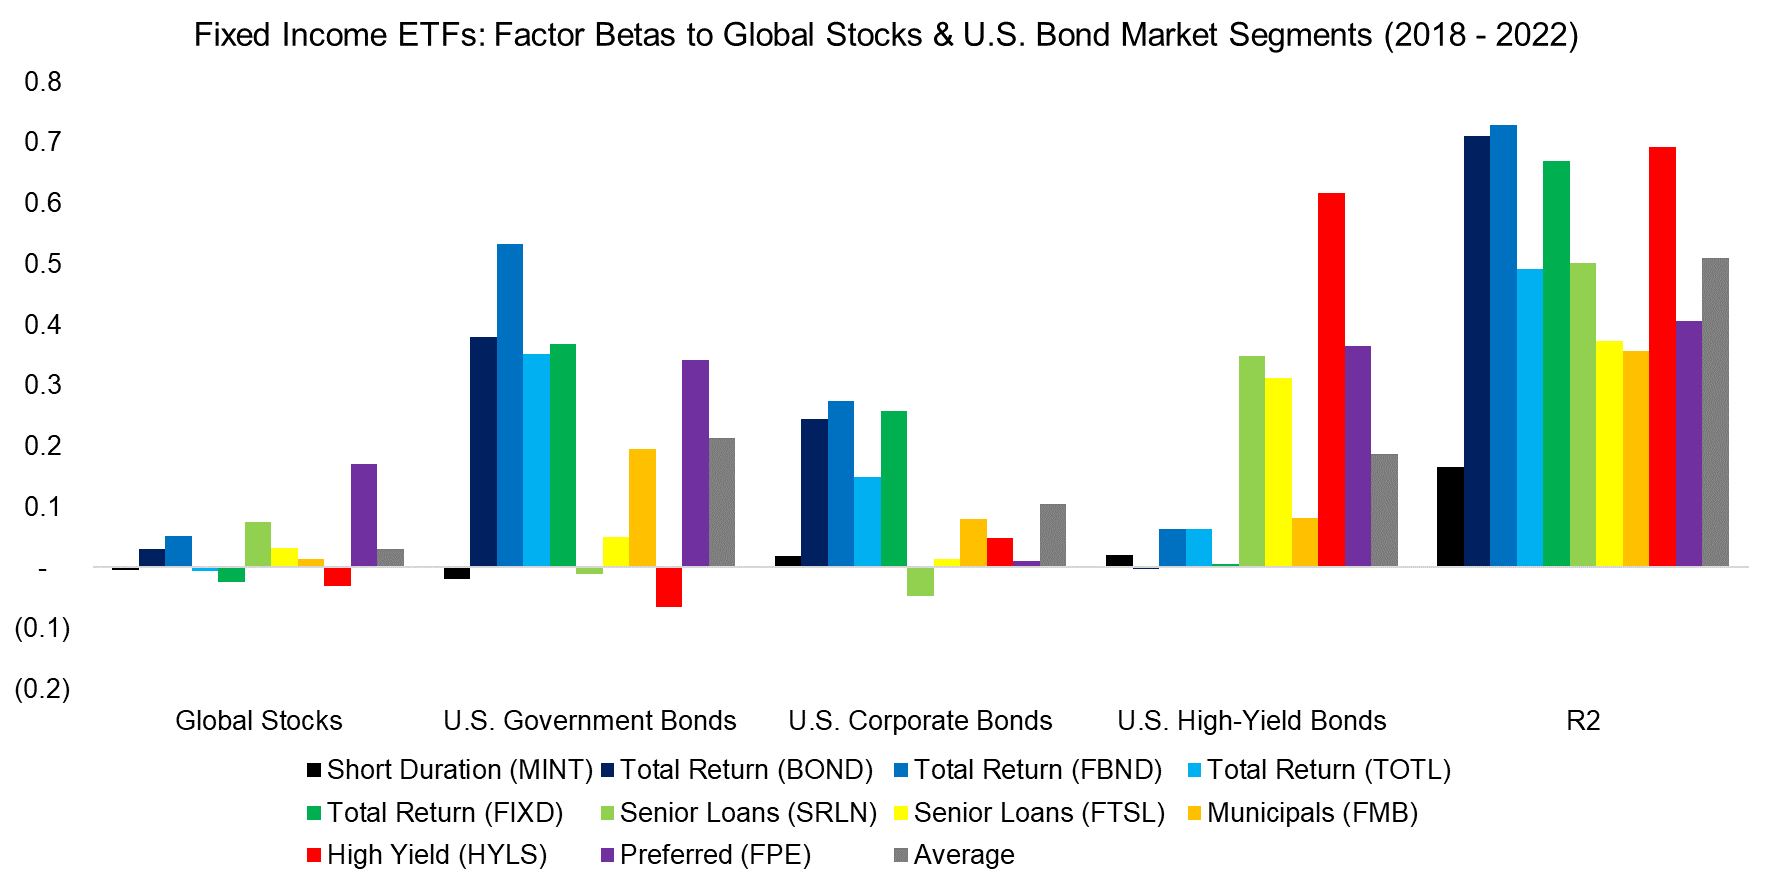 Fixed Income ETFs Factor Betas to Global Stocks & U.S. Bond Market Segments (2018 - 2022)